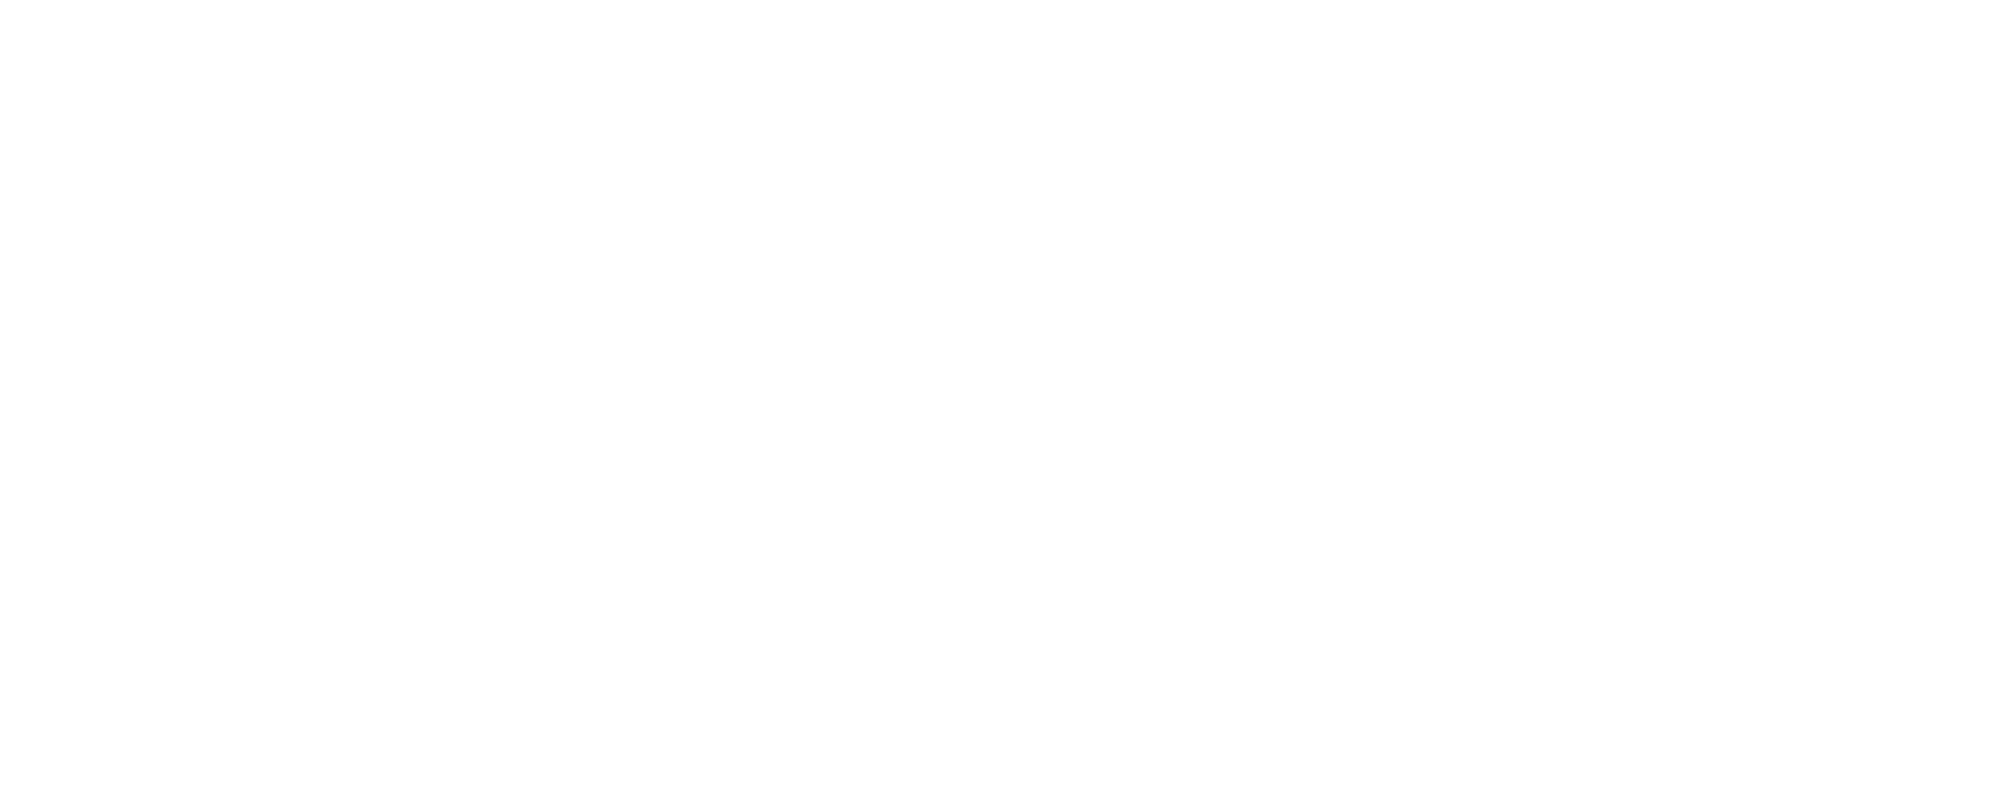 AMERICAN SEX DOLLS CO.